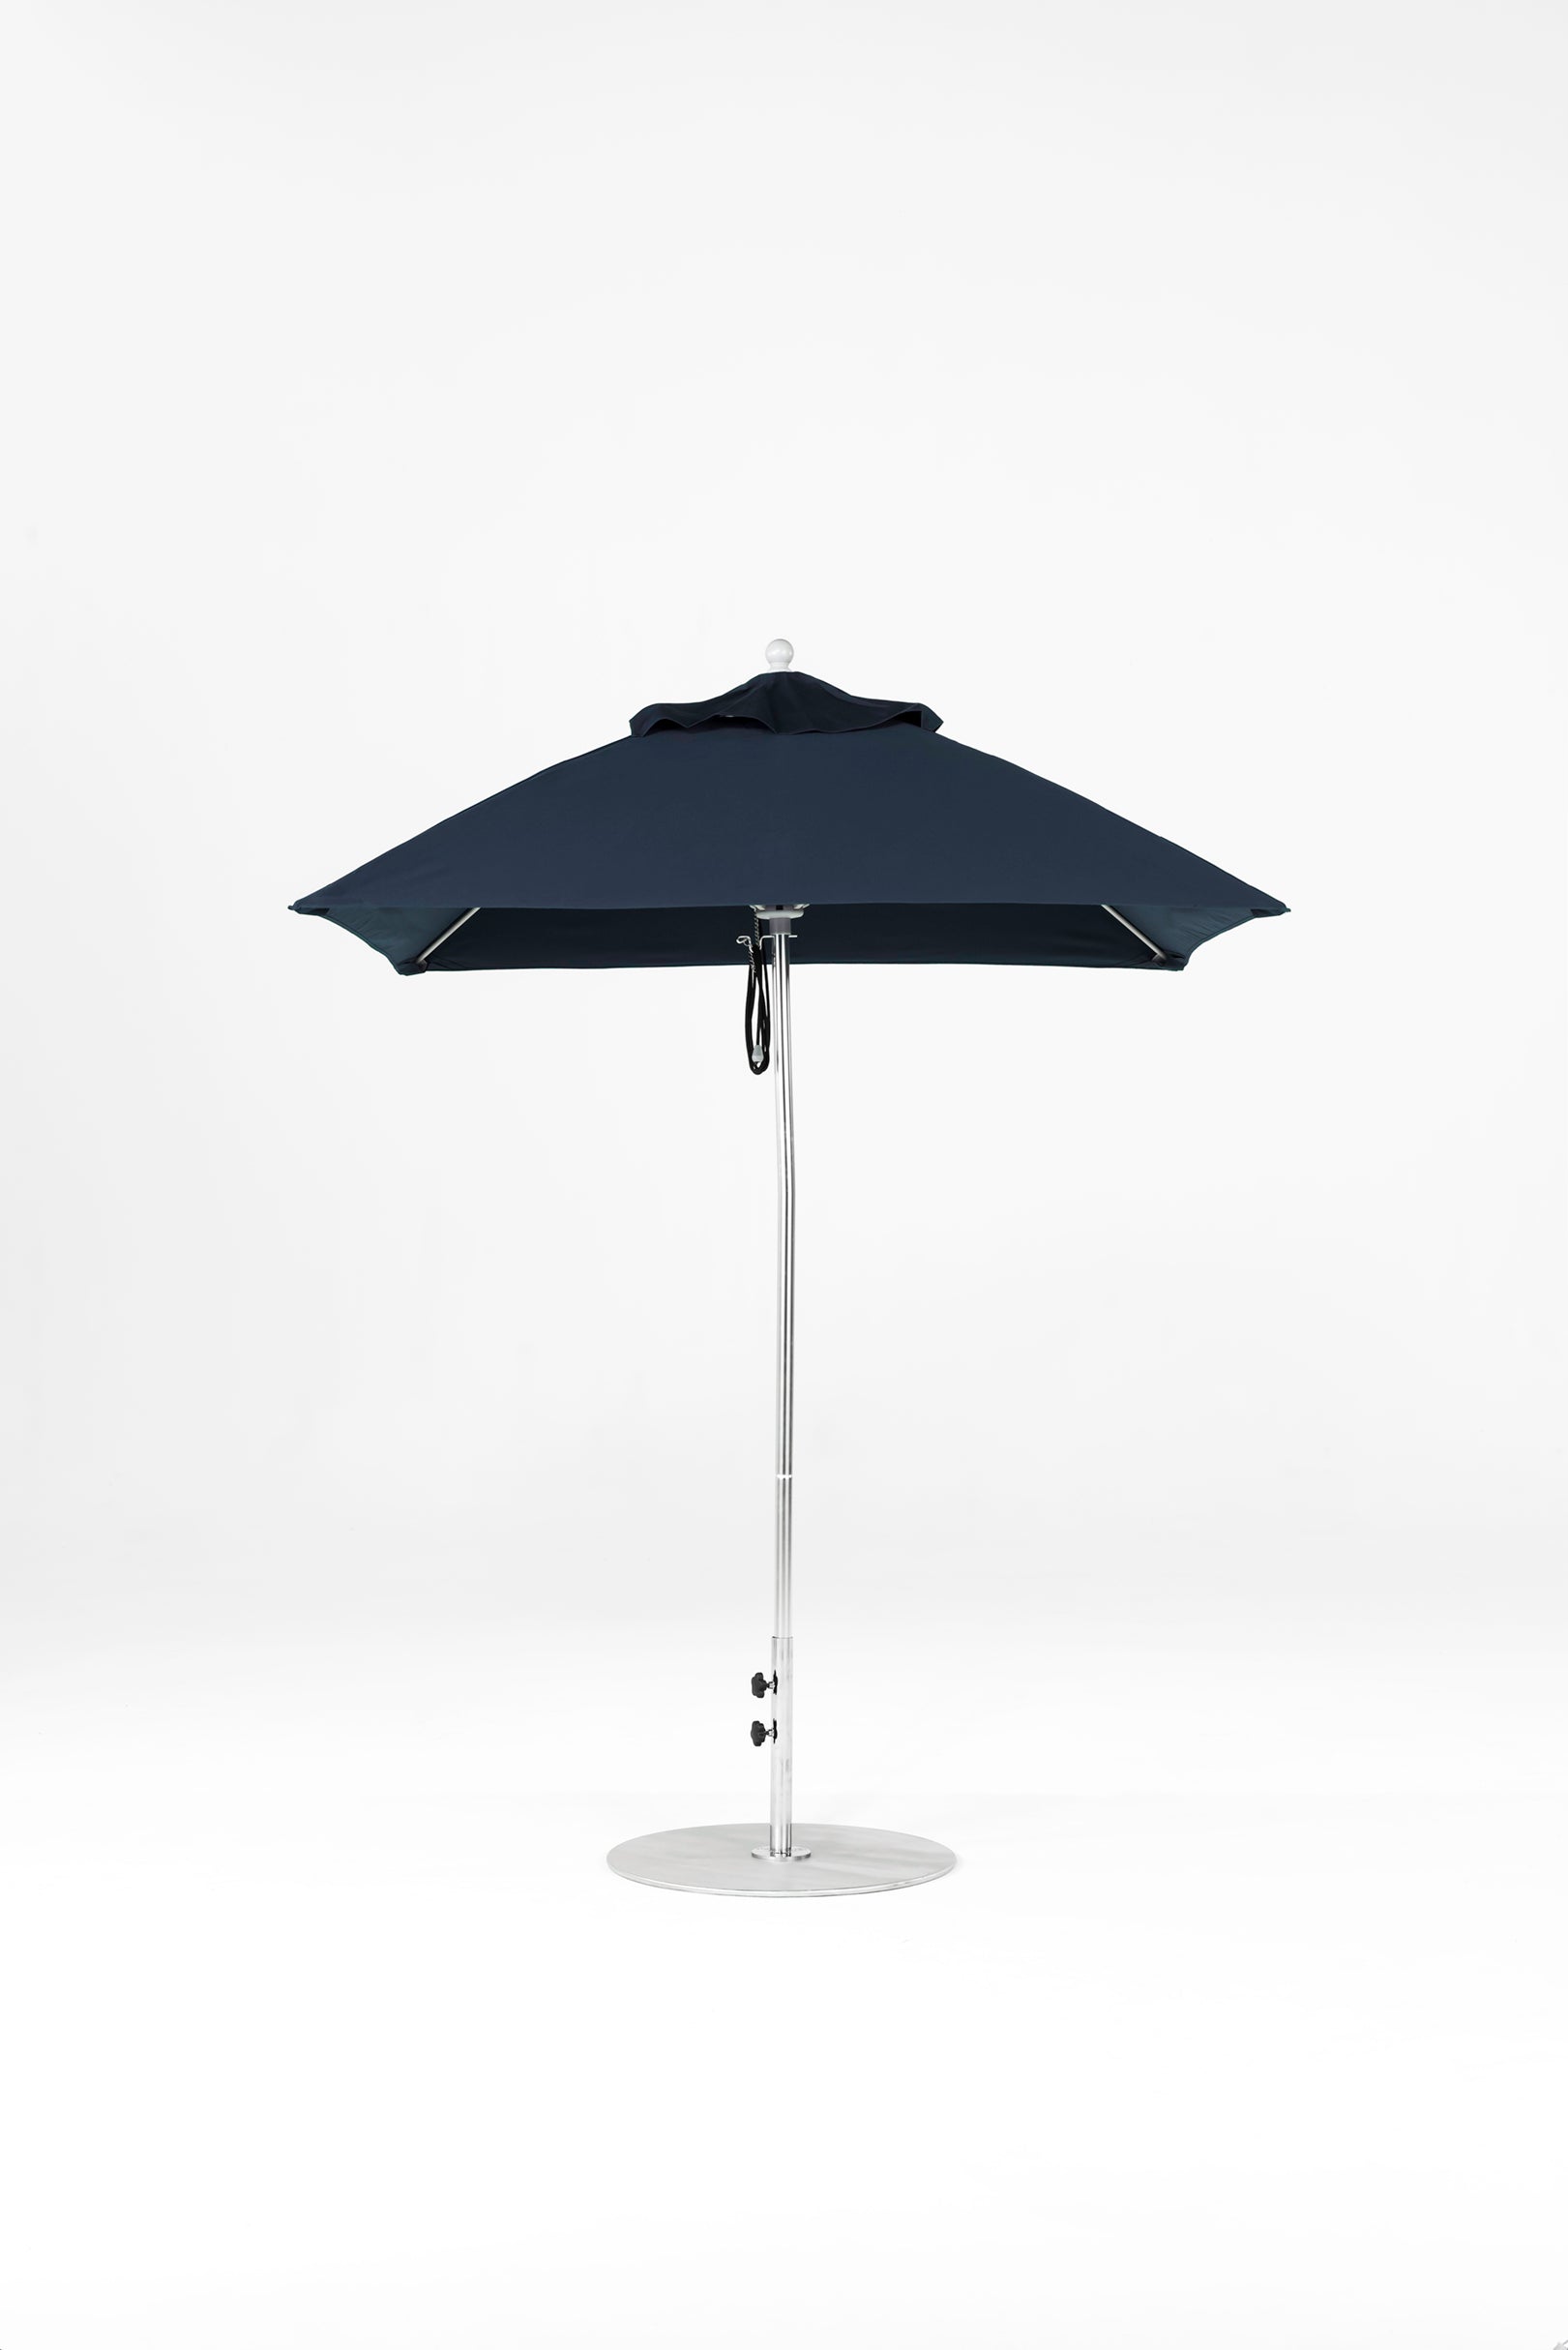 Monterey Market Umbrella - Pulley Lift